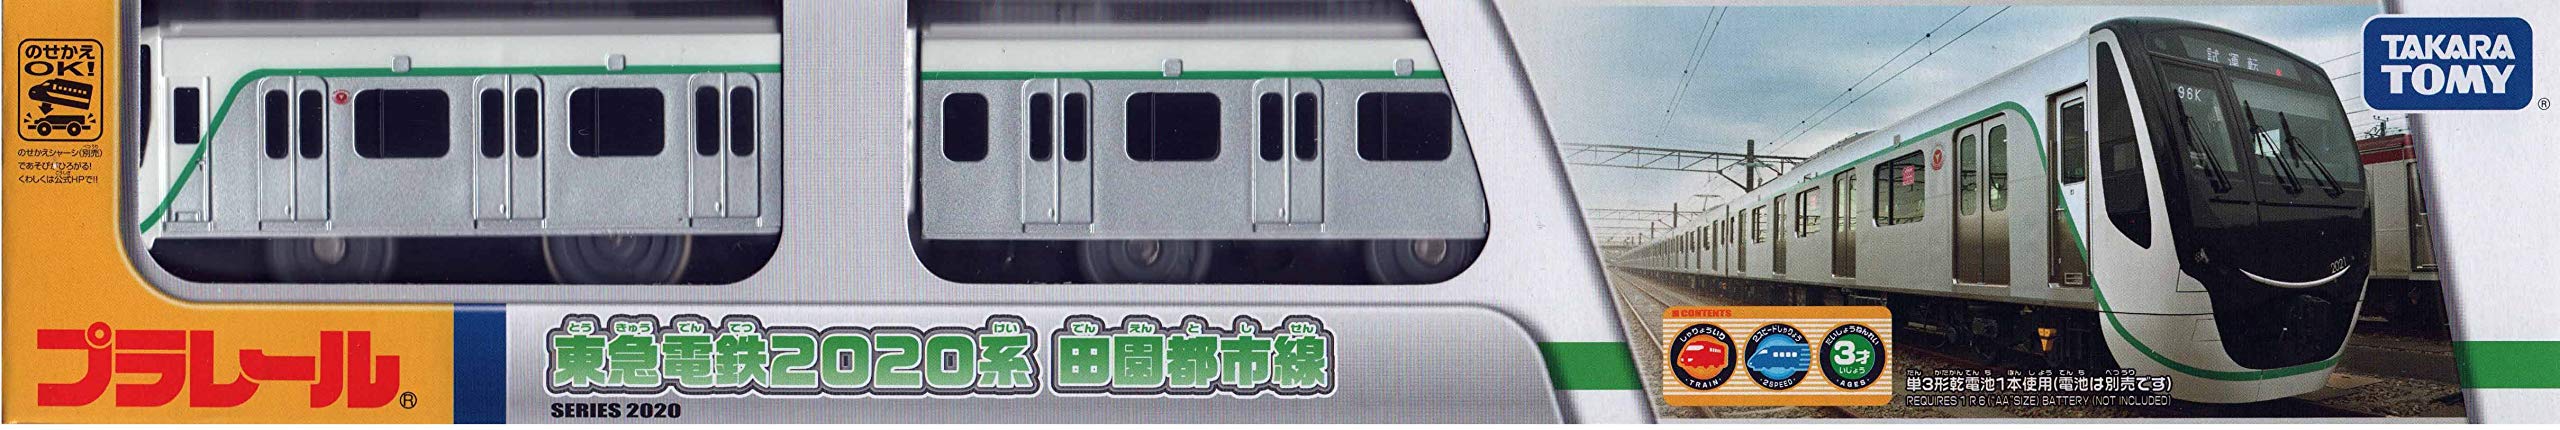 Takara Tomy 2020 Series Original Plarail Toy - Denentoshi Line Model